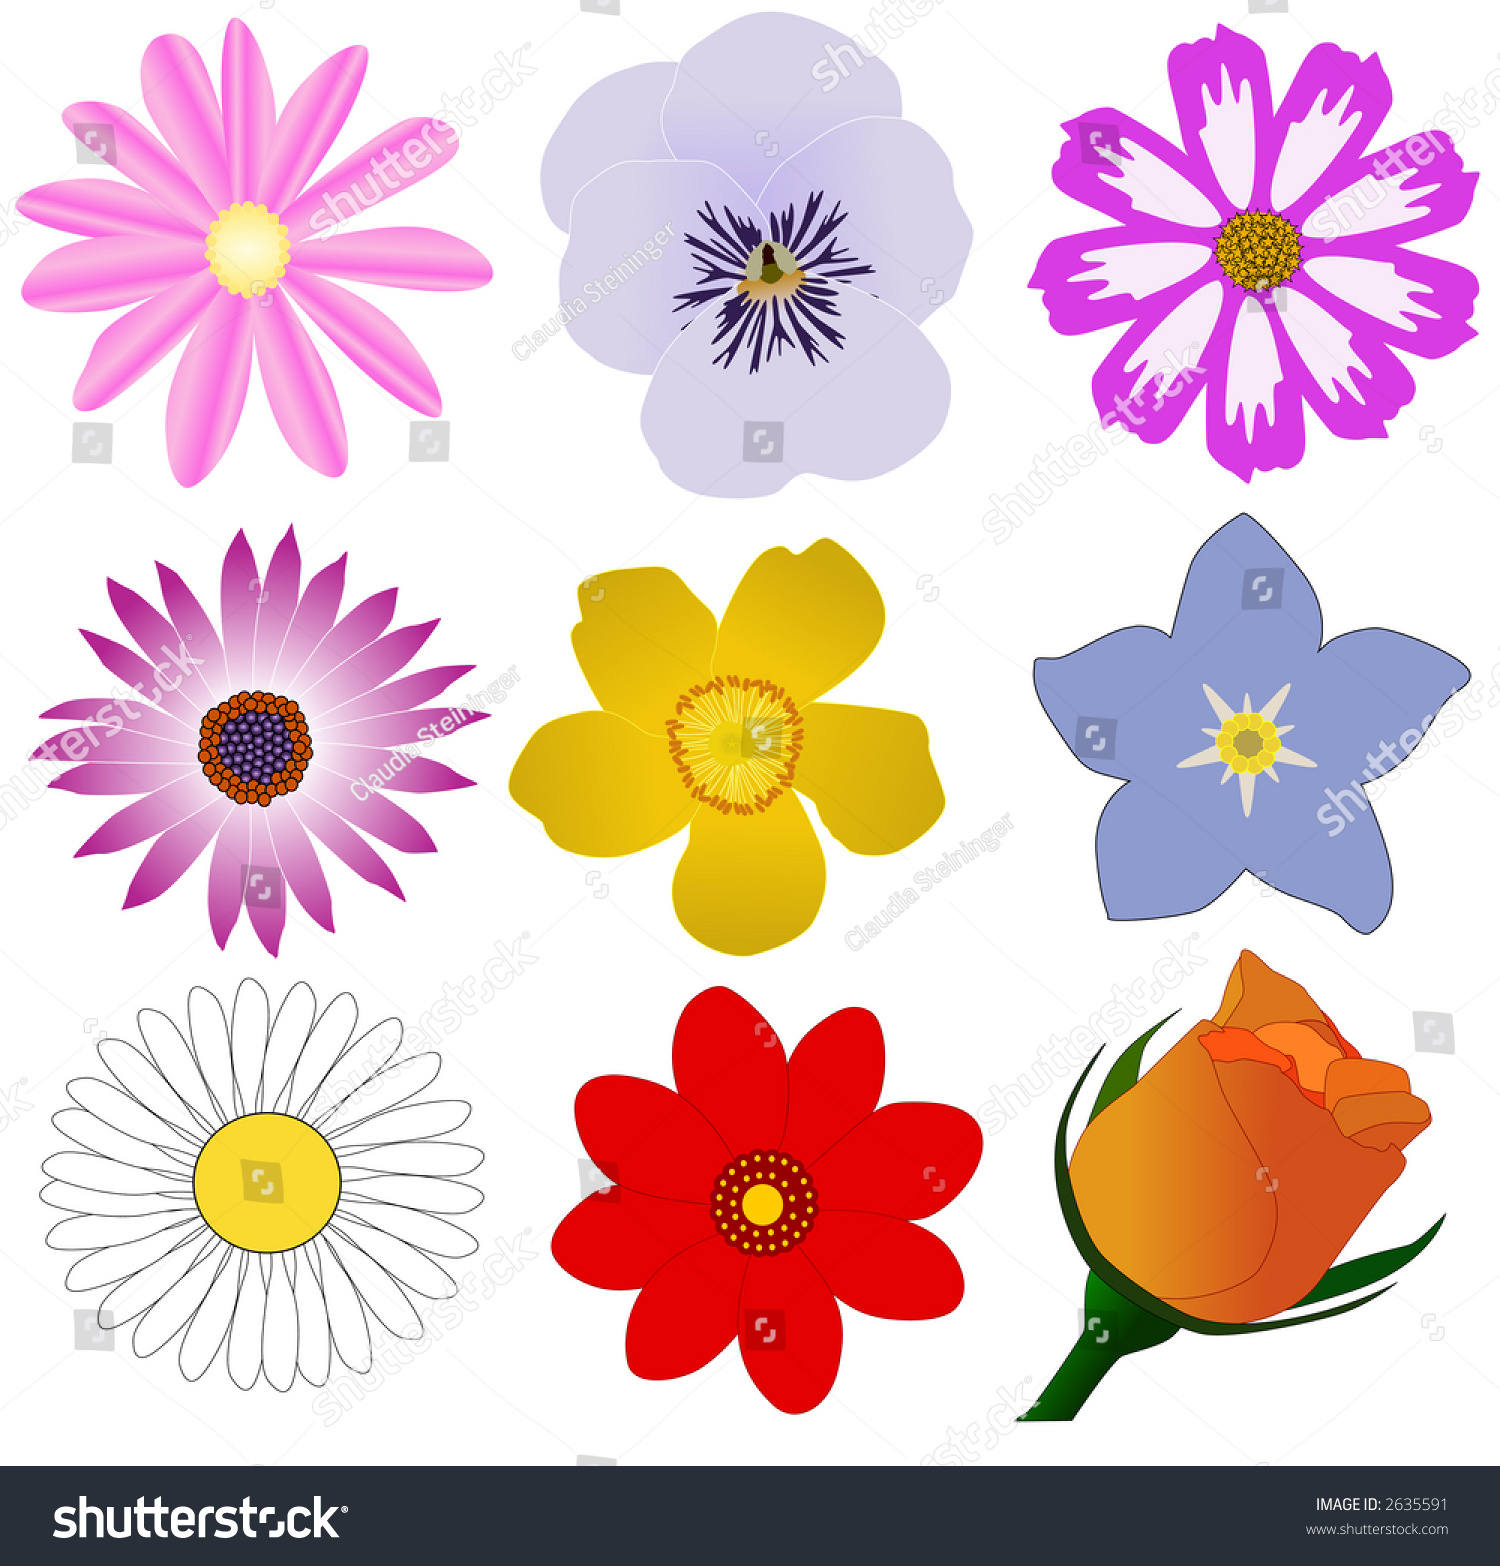 Flowers (Vector) - 2635591 : Shutterstock